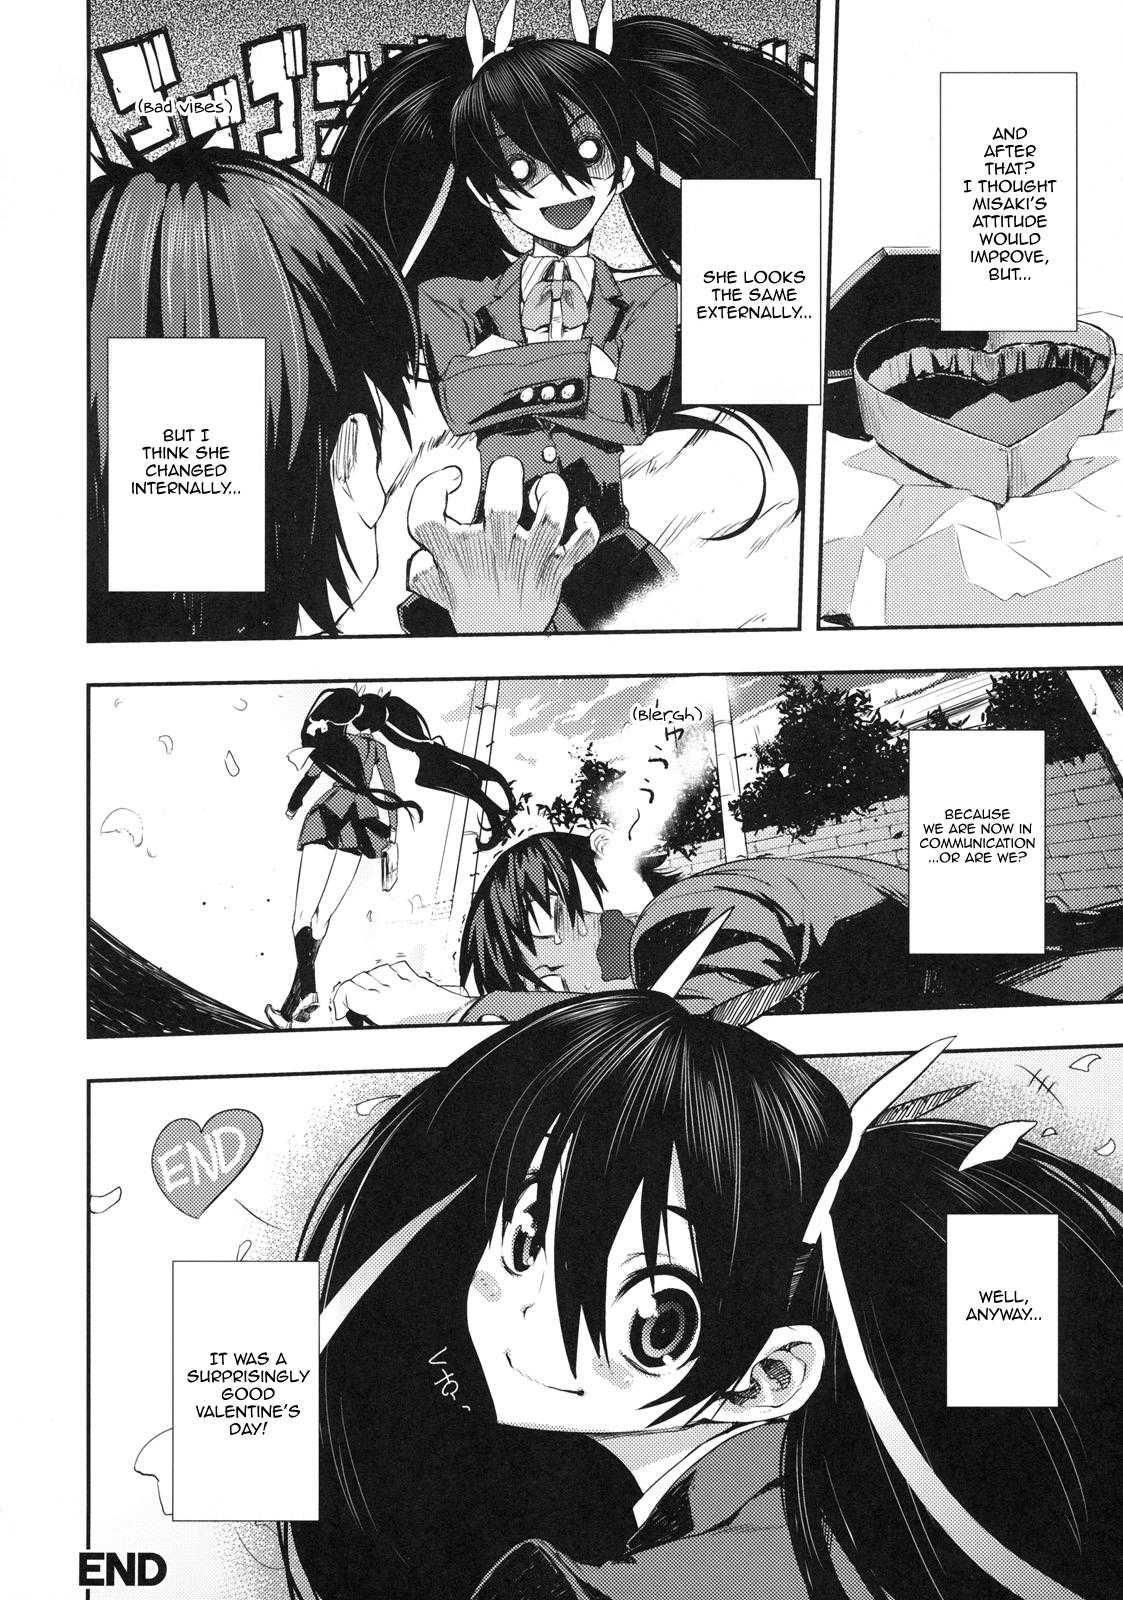 [Hyocorou] February 14 (Shinzui Valentine Special Vol.1) [English] [Sling] 